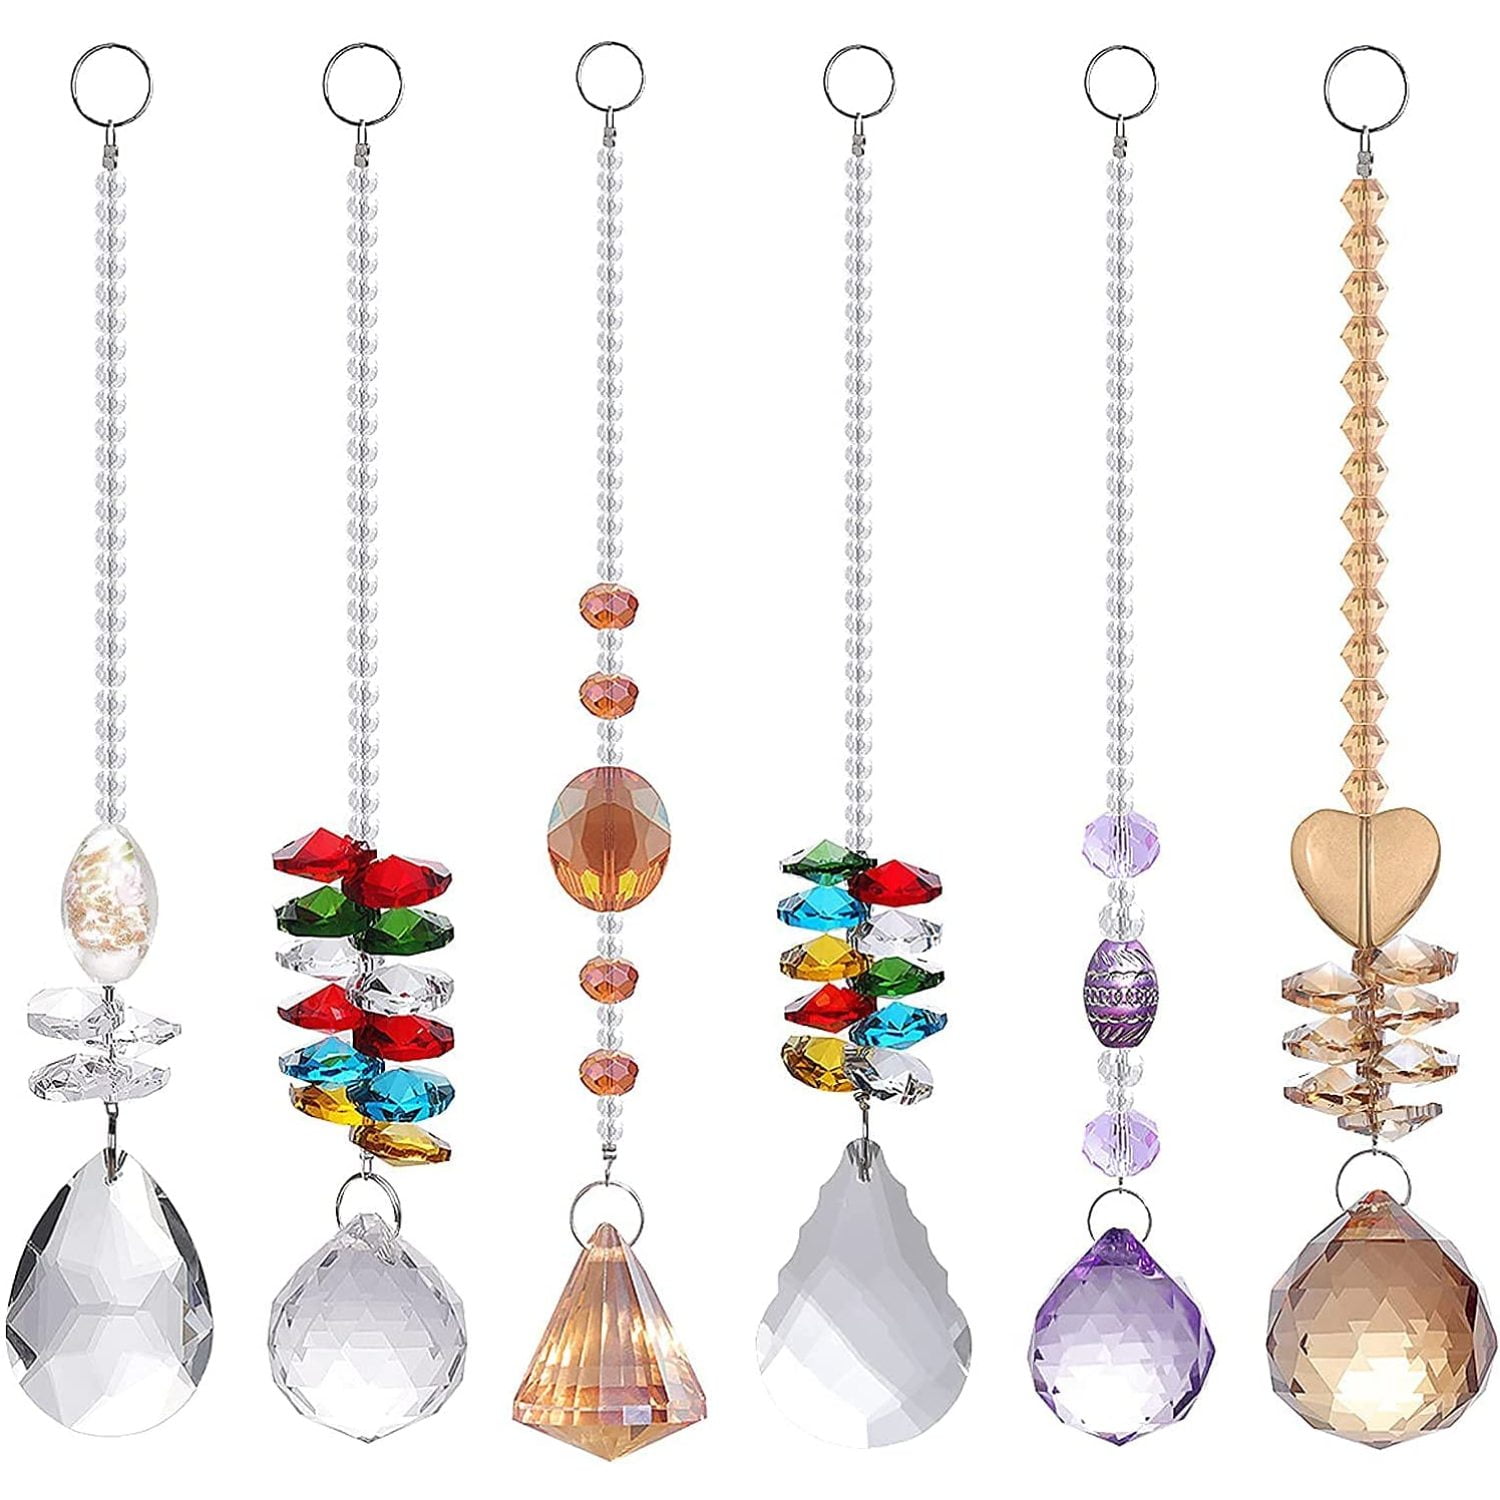 Set 3 Chakra Crystal Ball Hanging Suncatcher Christmas Gift Ornament with Box